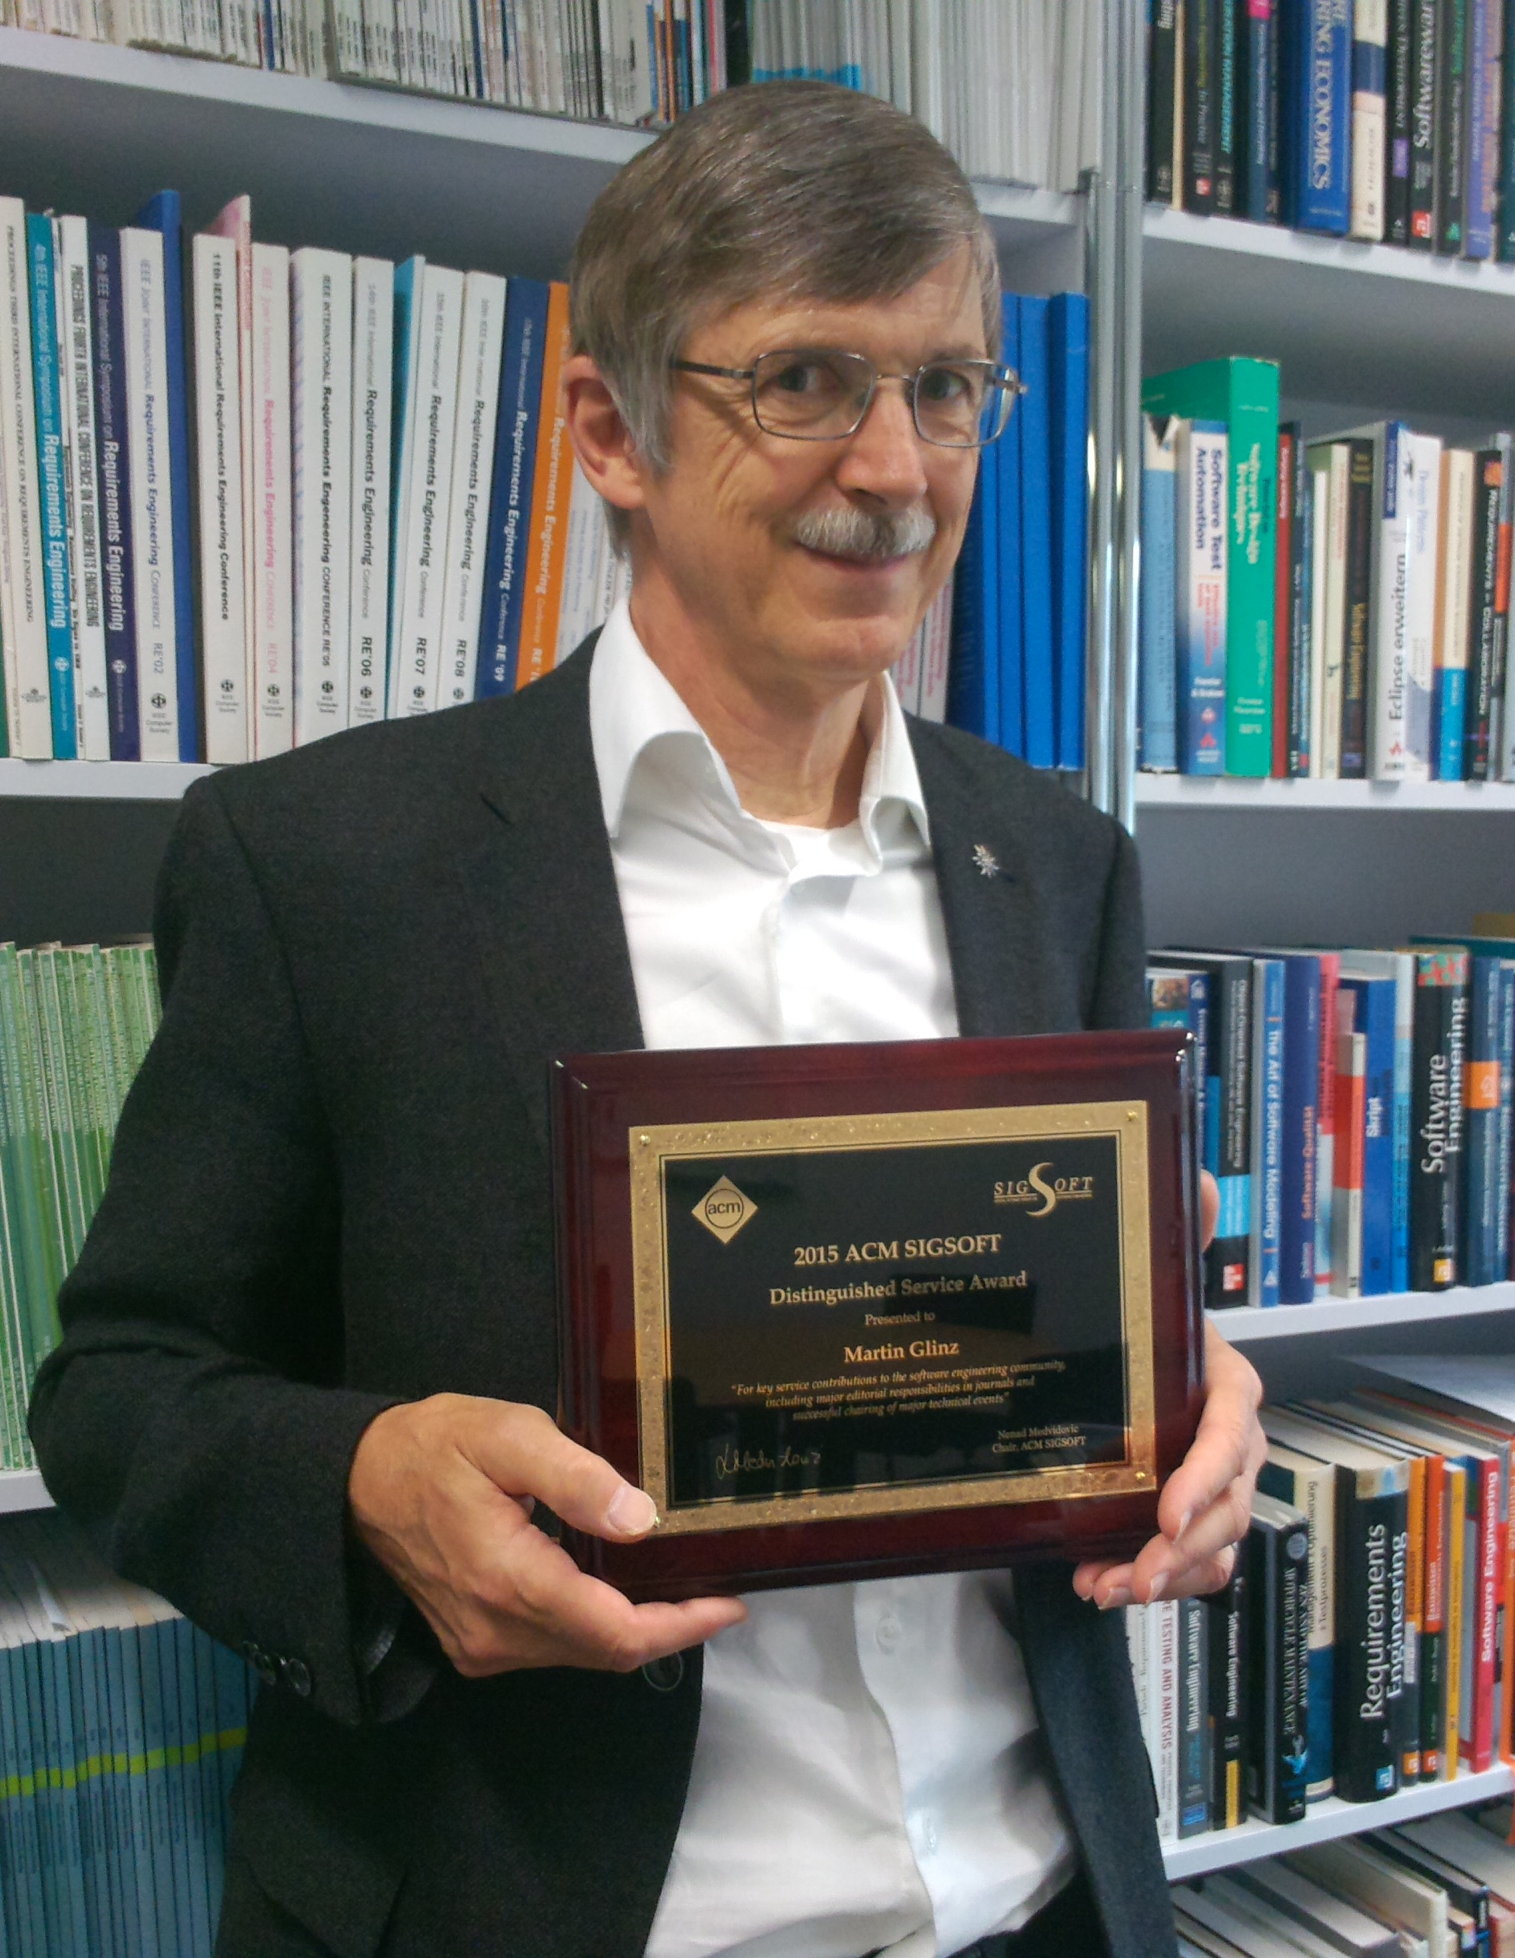 Martin Glinz showing his ACM SIGSOFT Distinguished Service Award